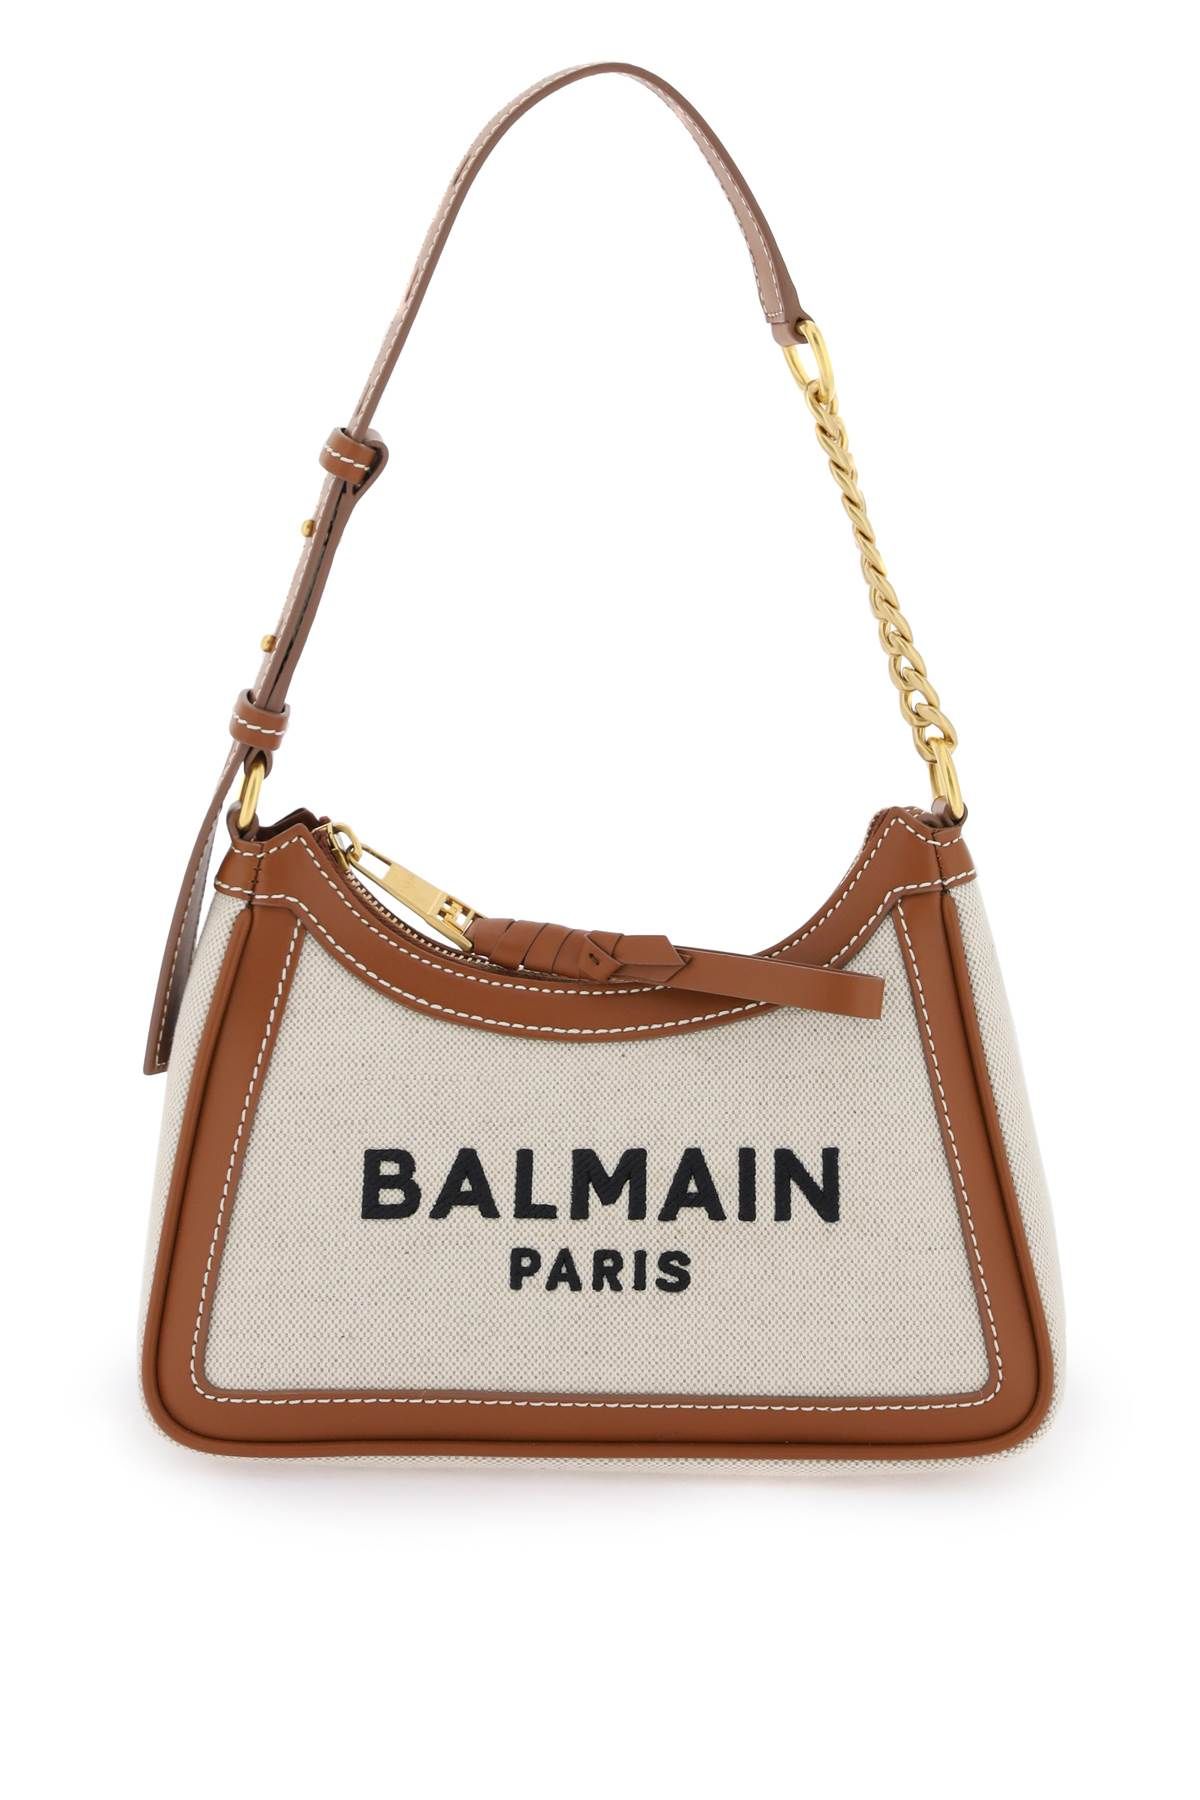 Balmain BALMAIN b-army shoulder bag